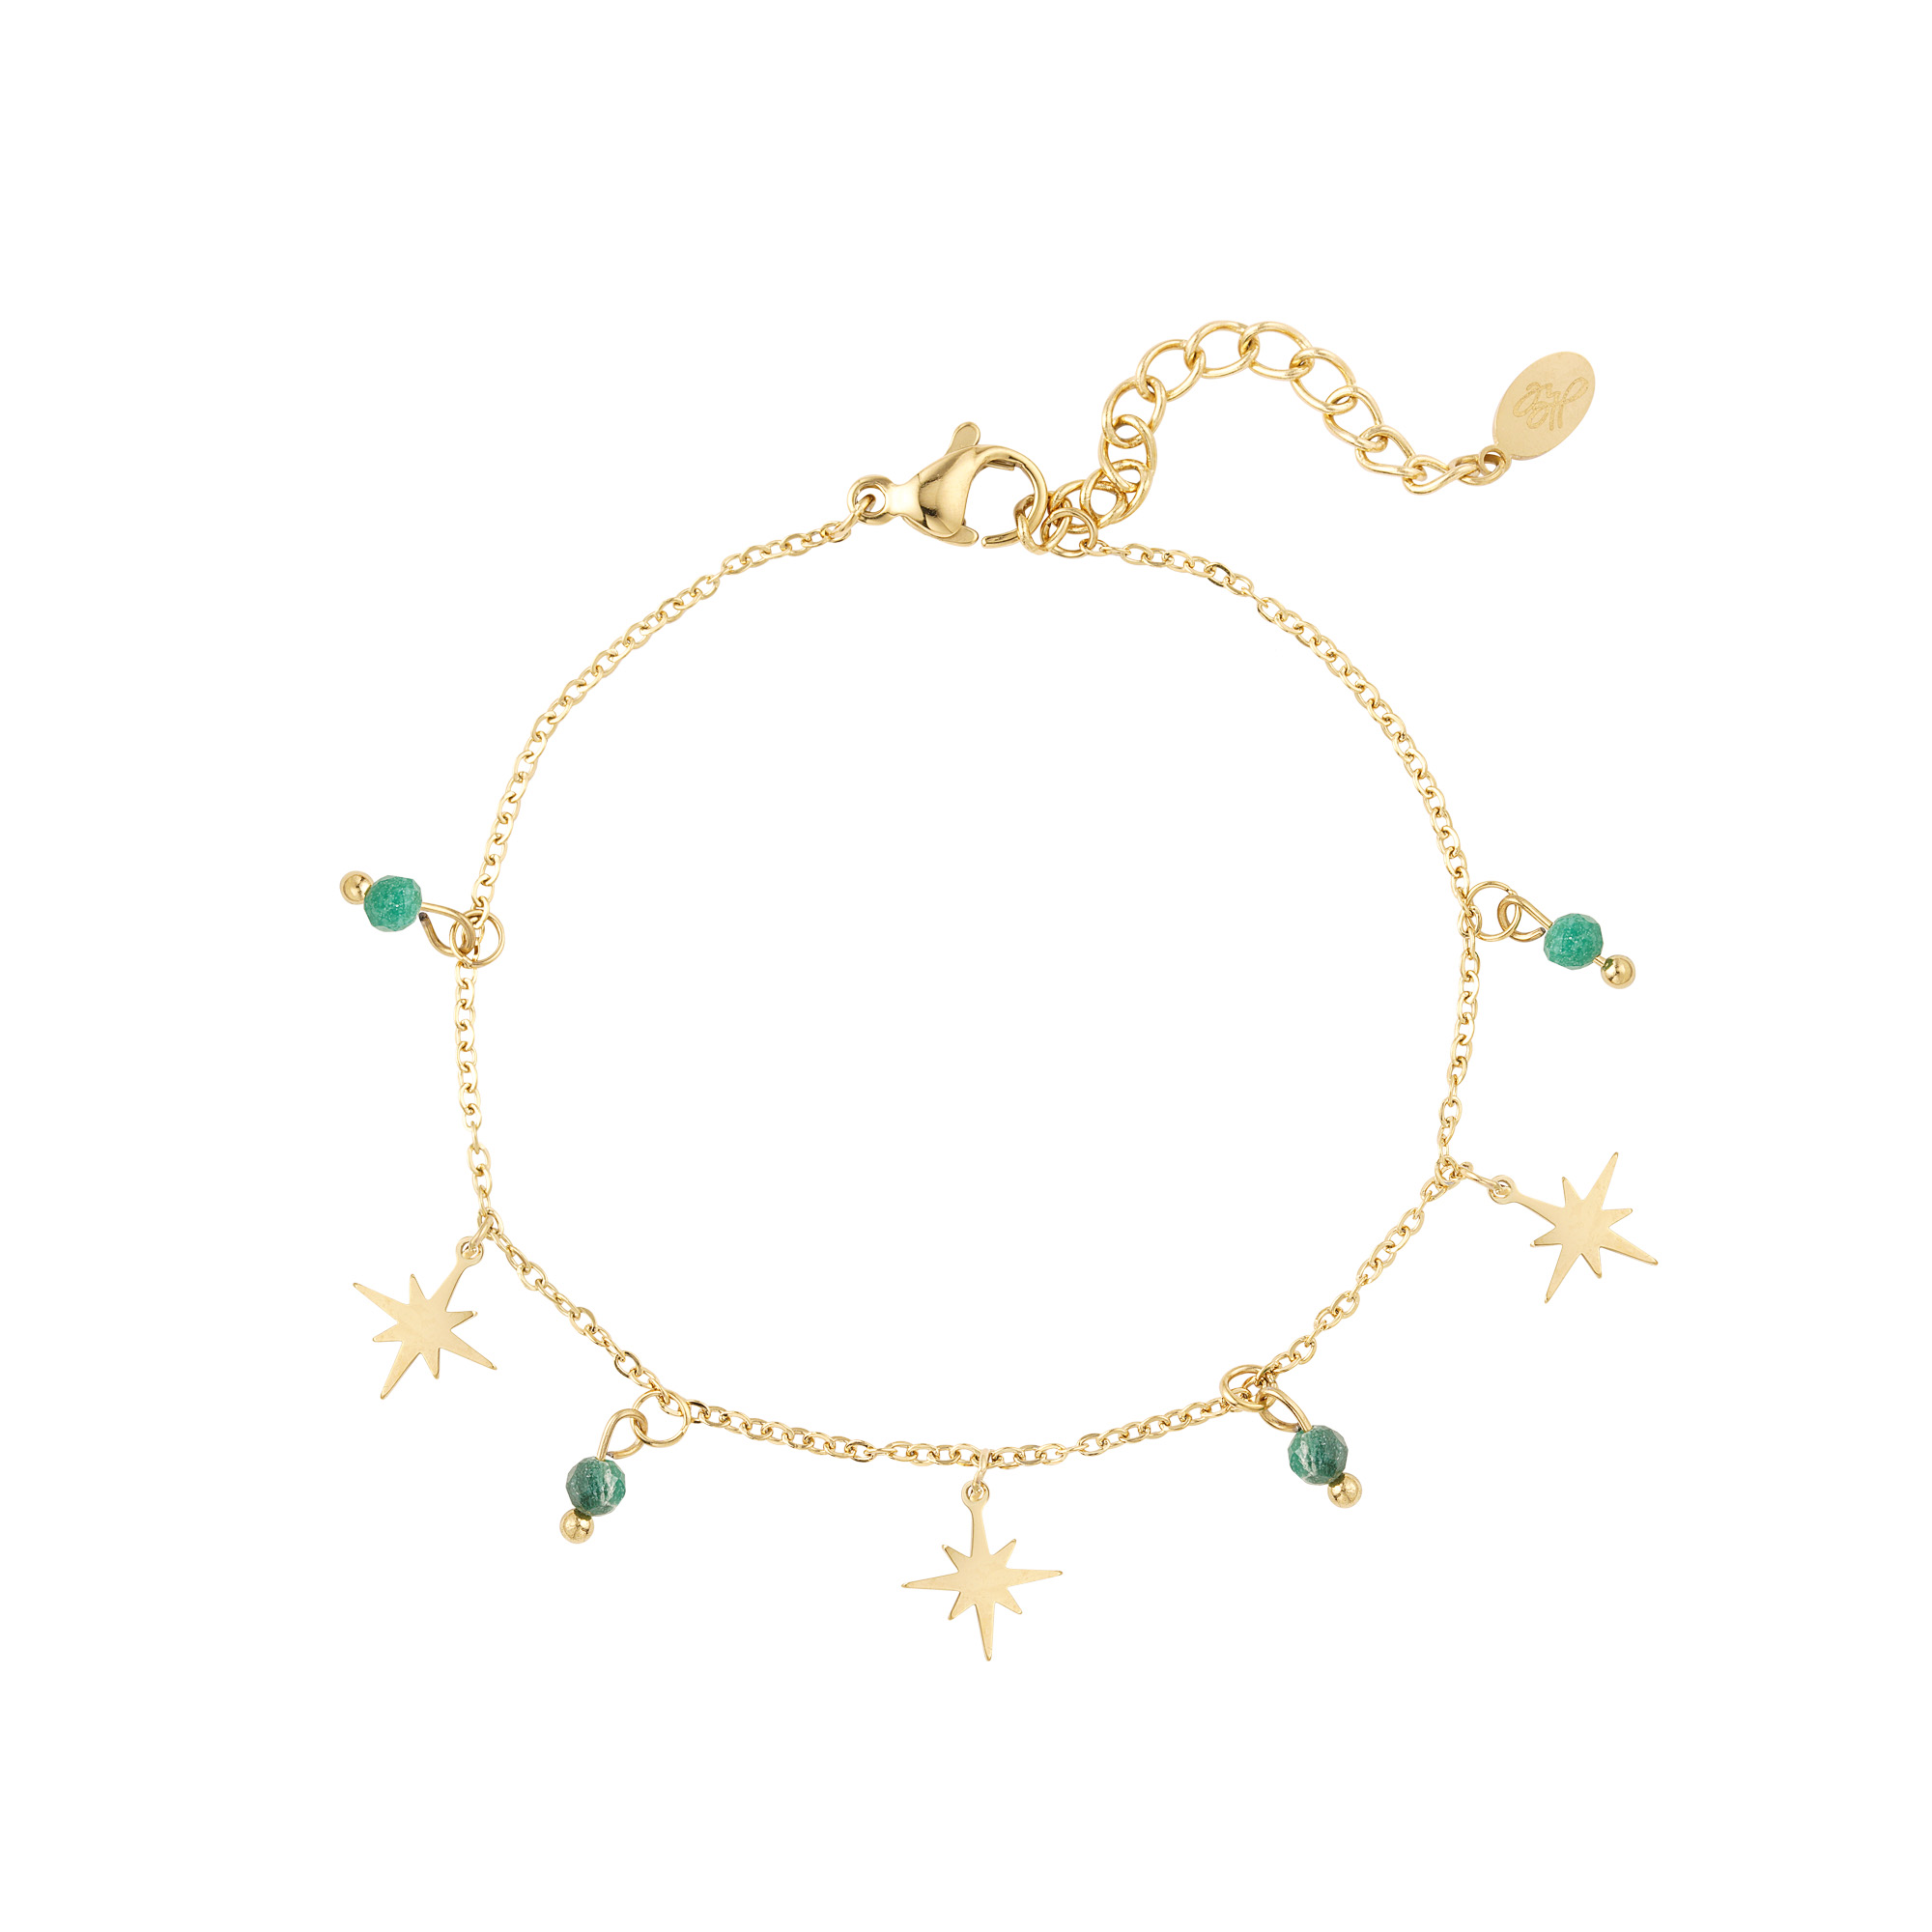 North star bracelet & beads